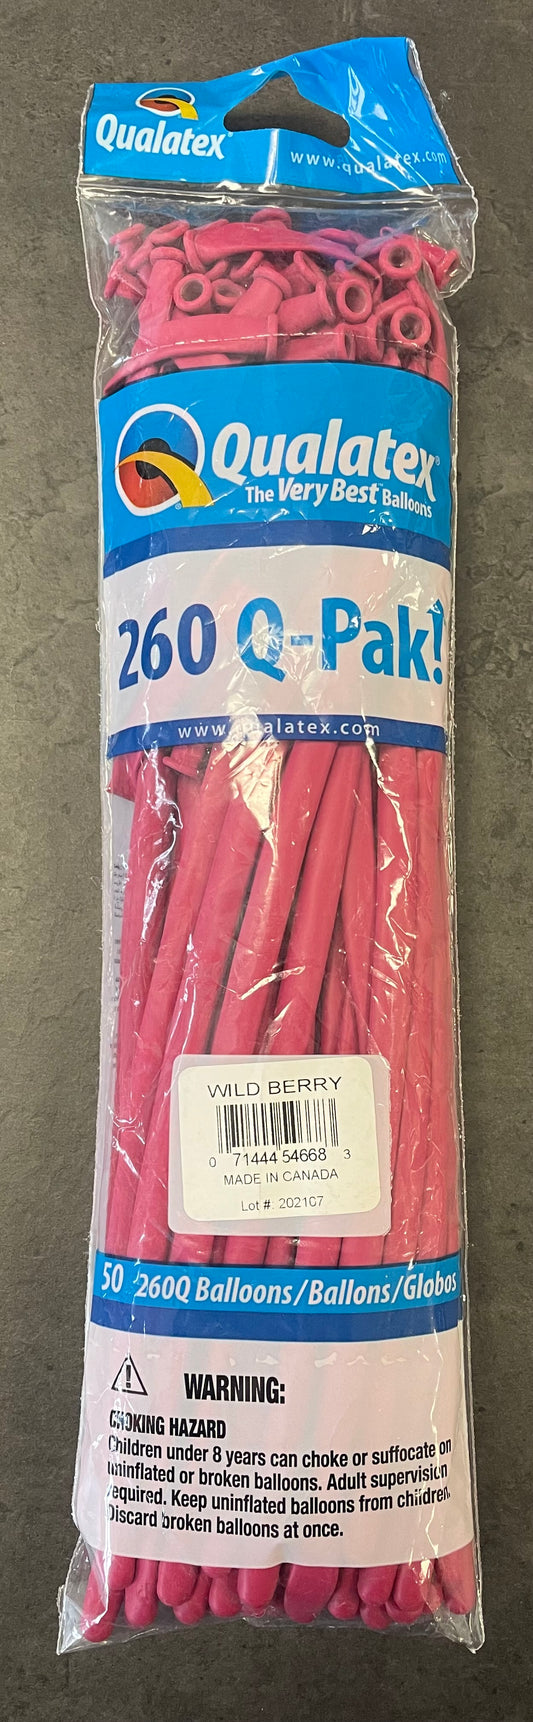 Qualatex 260 wild berry